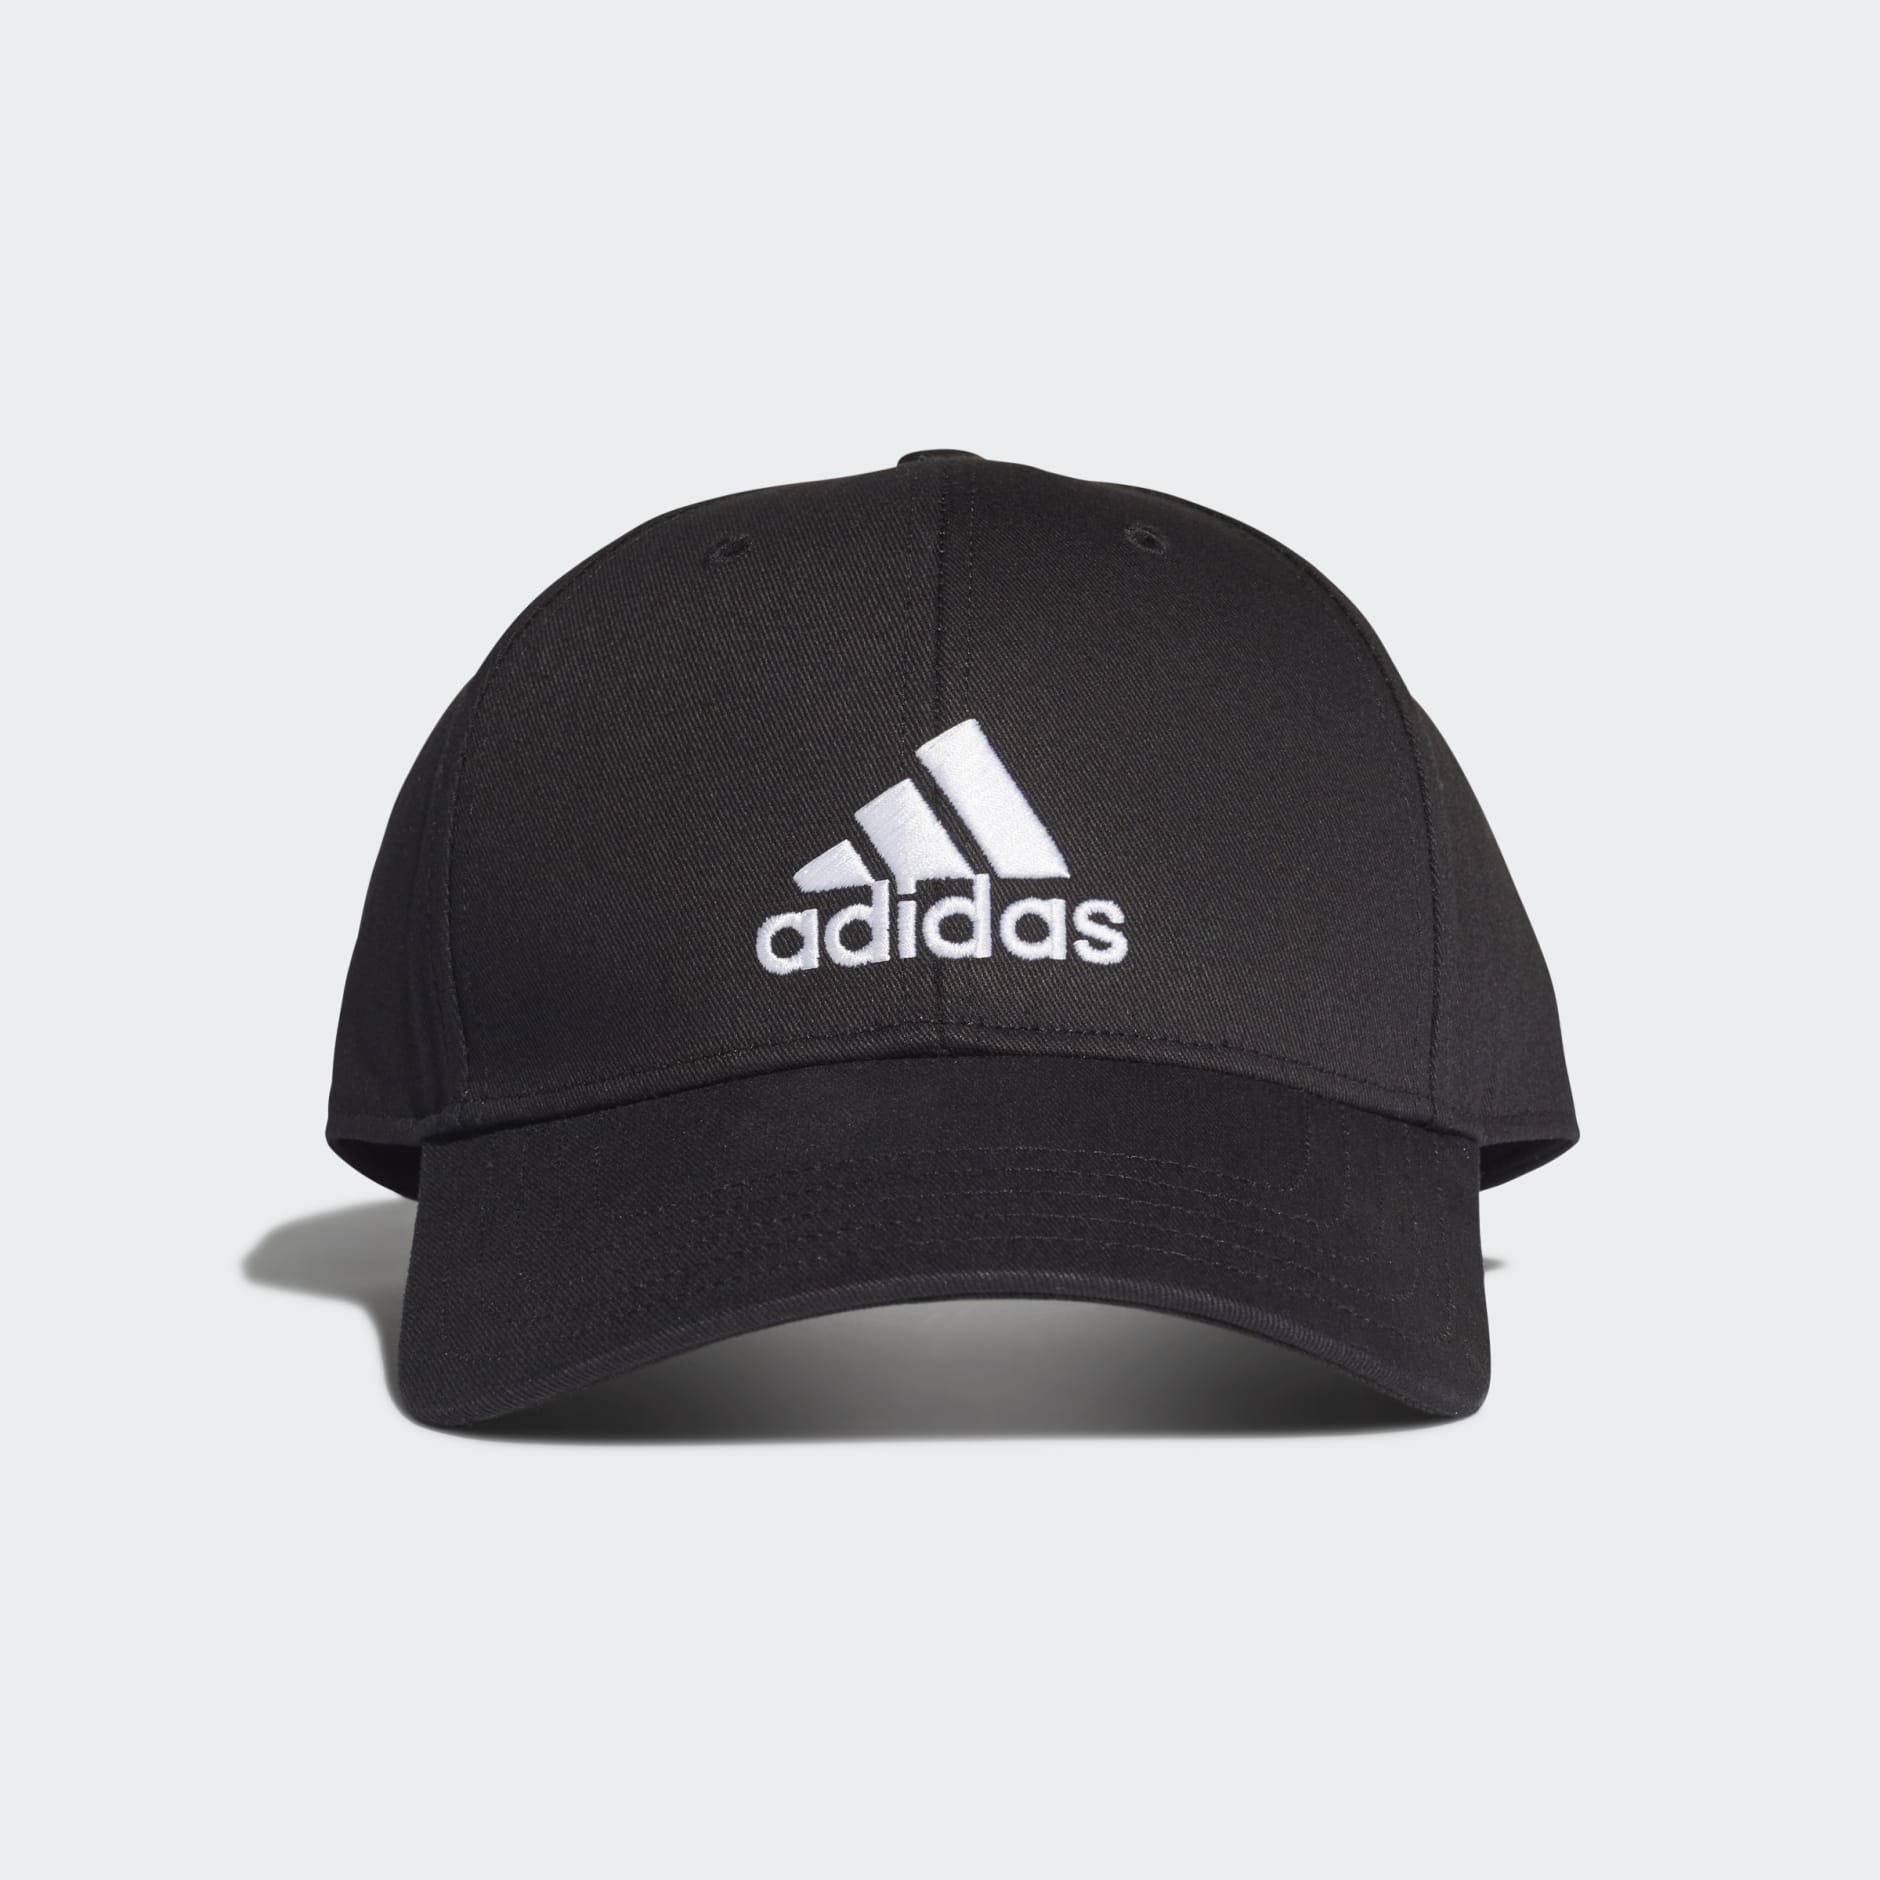 adidas BASEBALL CAP - Black | adidas LK